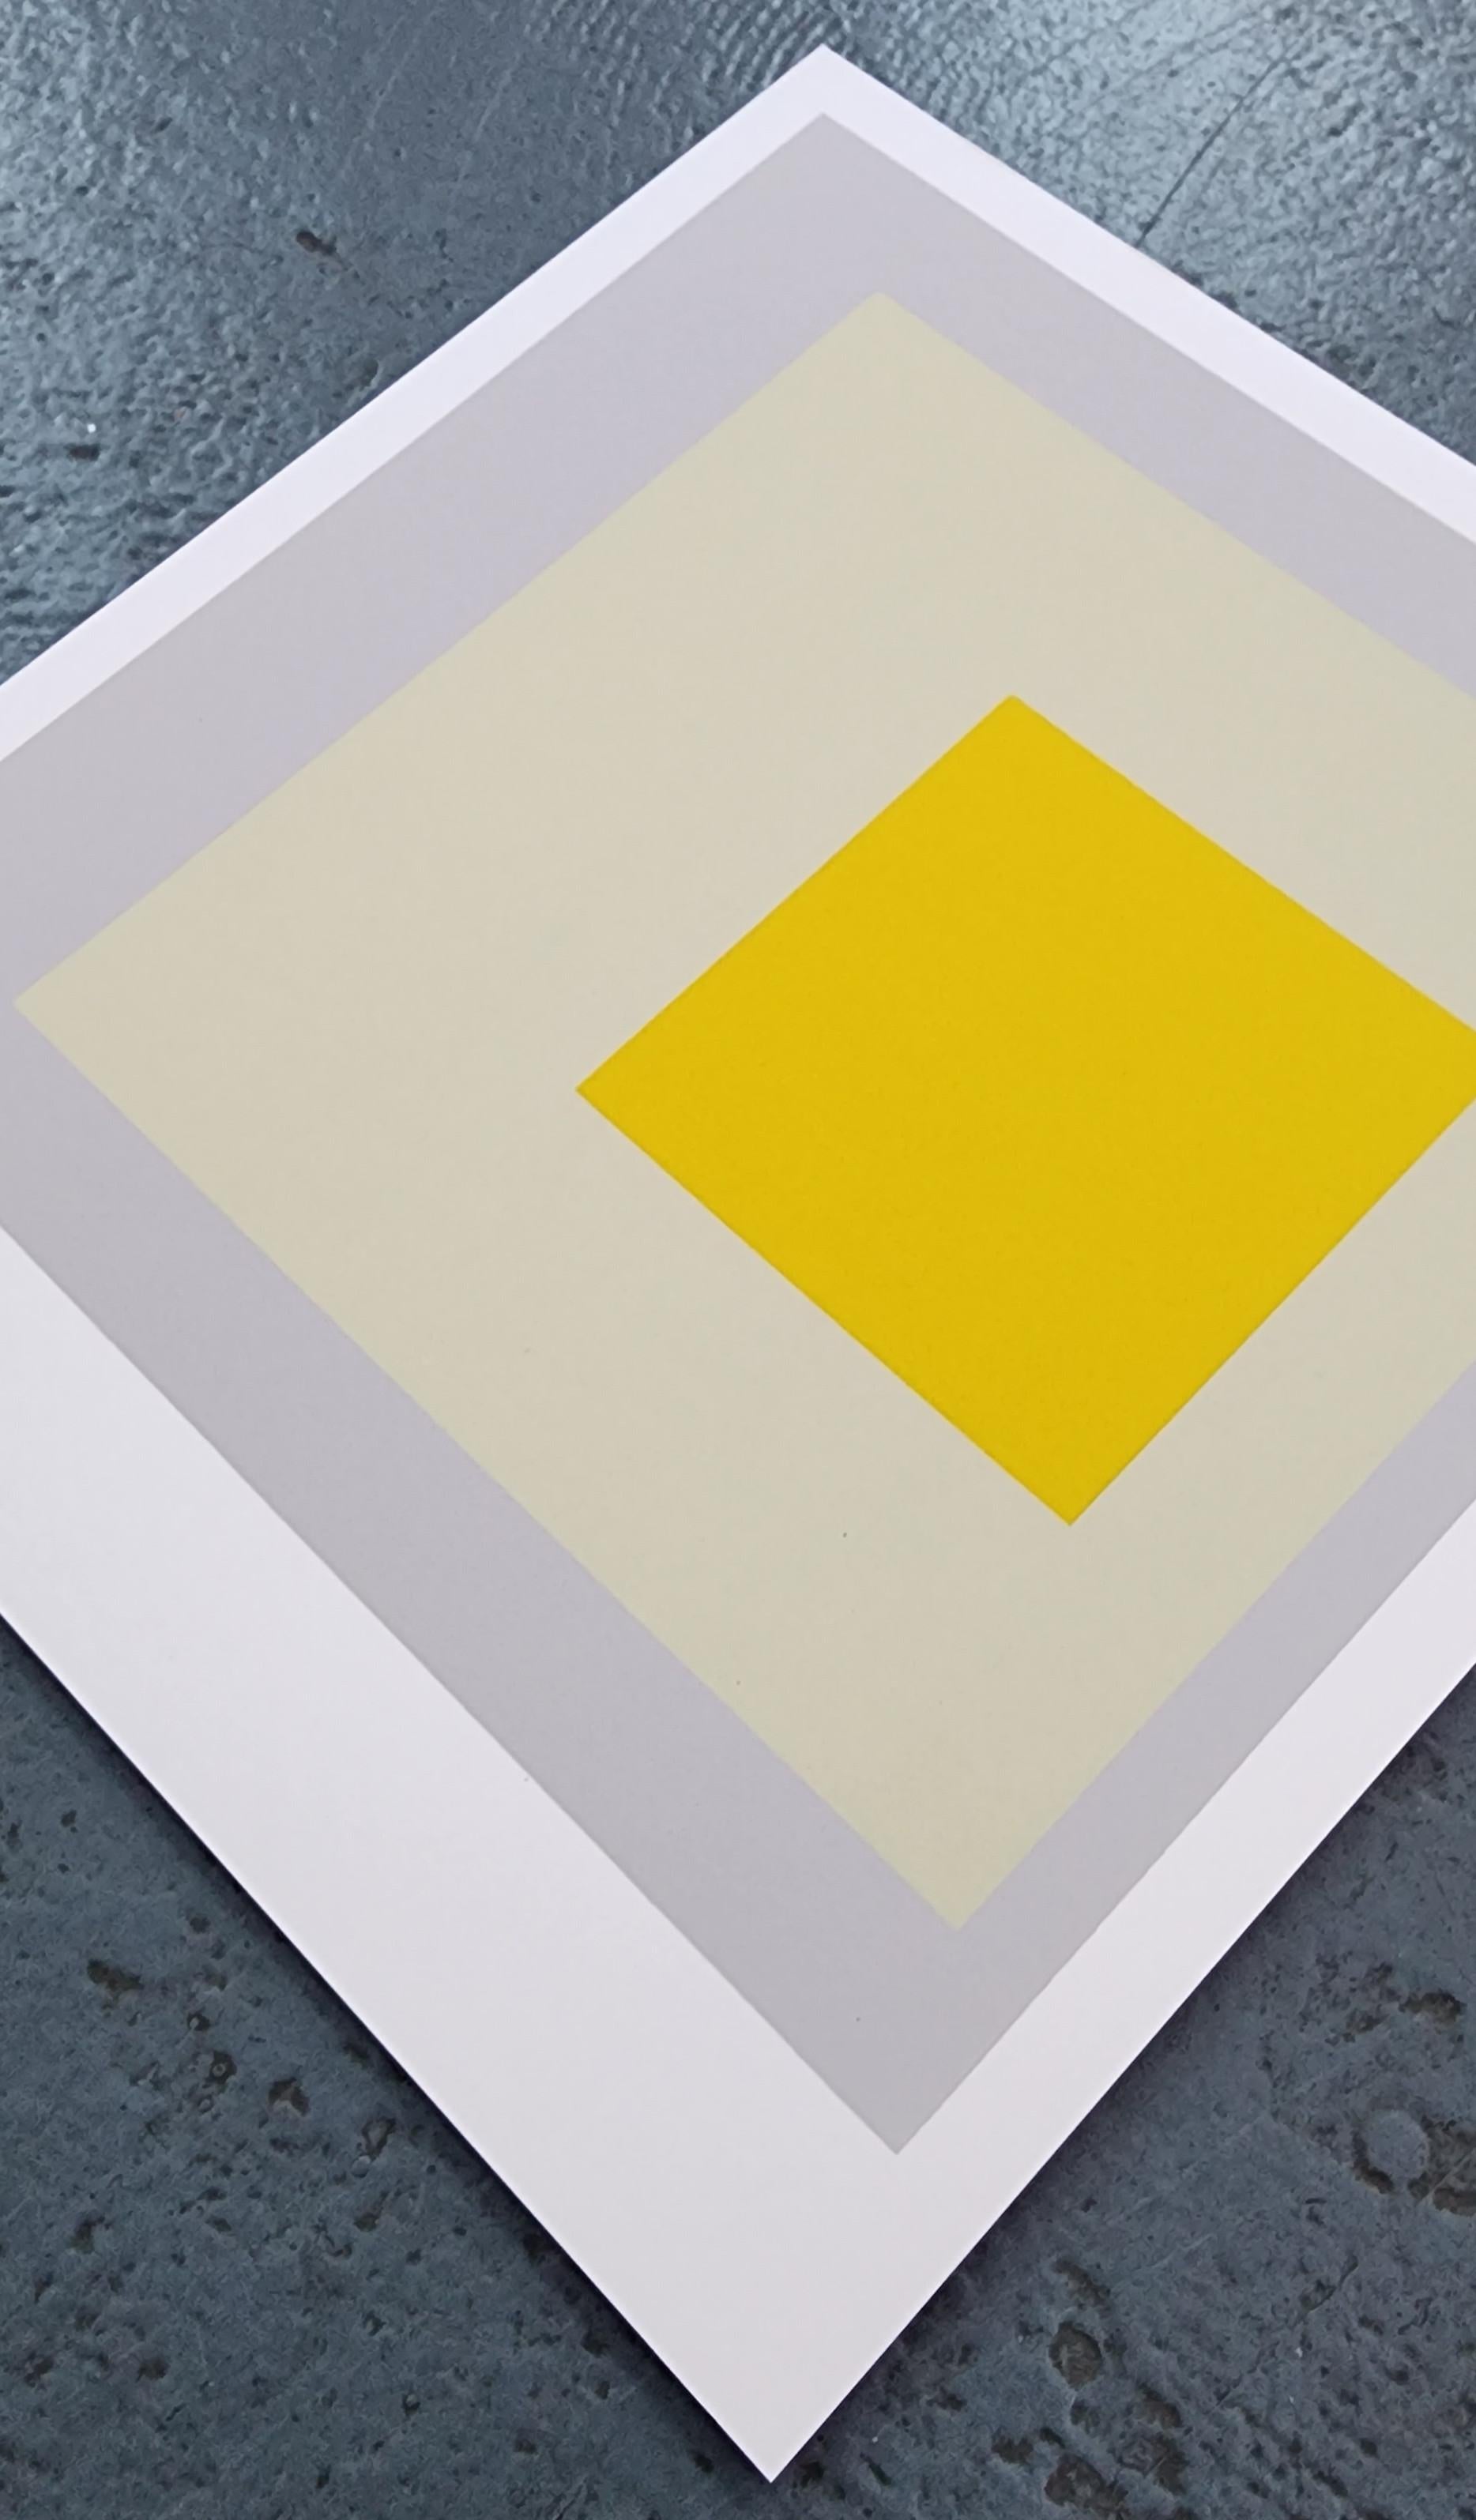 Homage to the Square: Impact (Bauhaus, Minimalism, 50% OFF LIST PRICE) 2